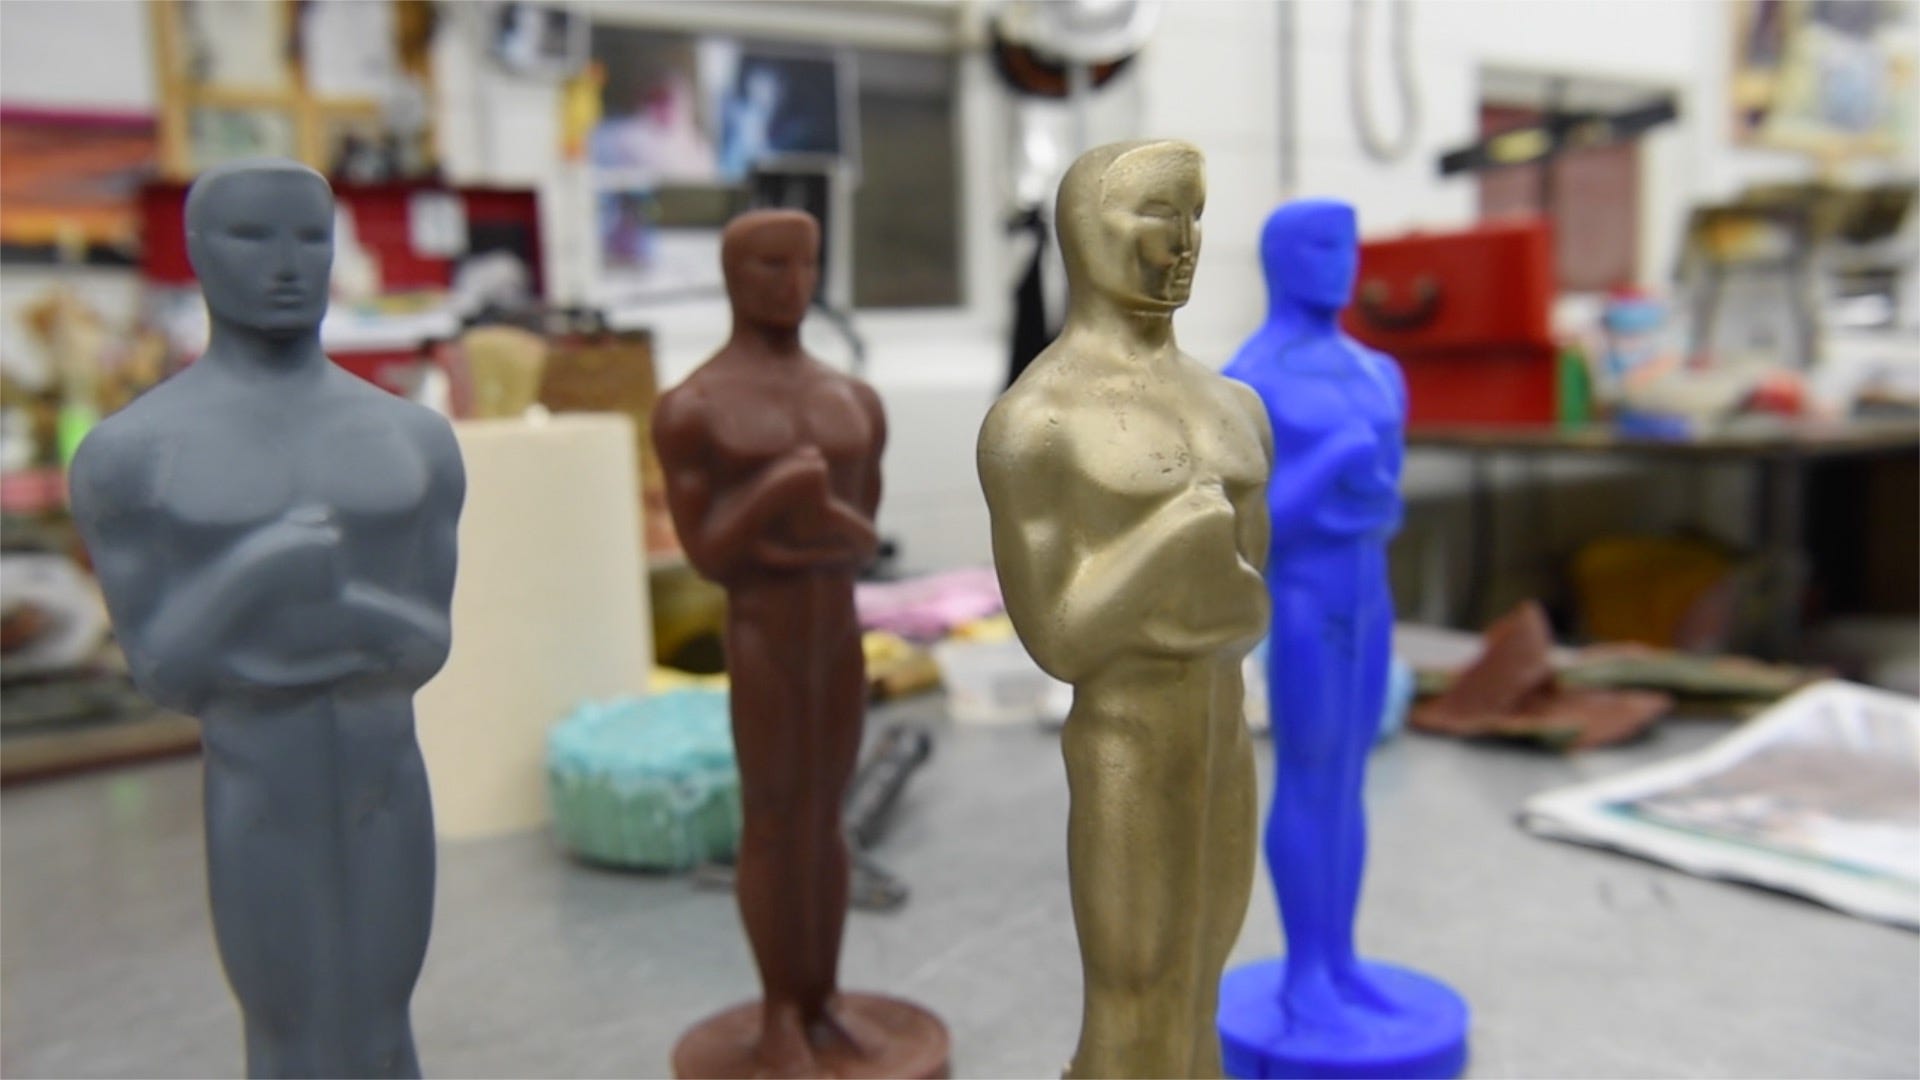 Local fine art foundry makes Oscar statues